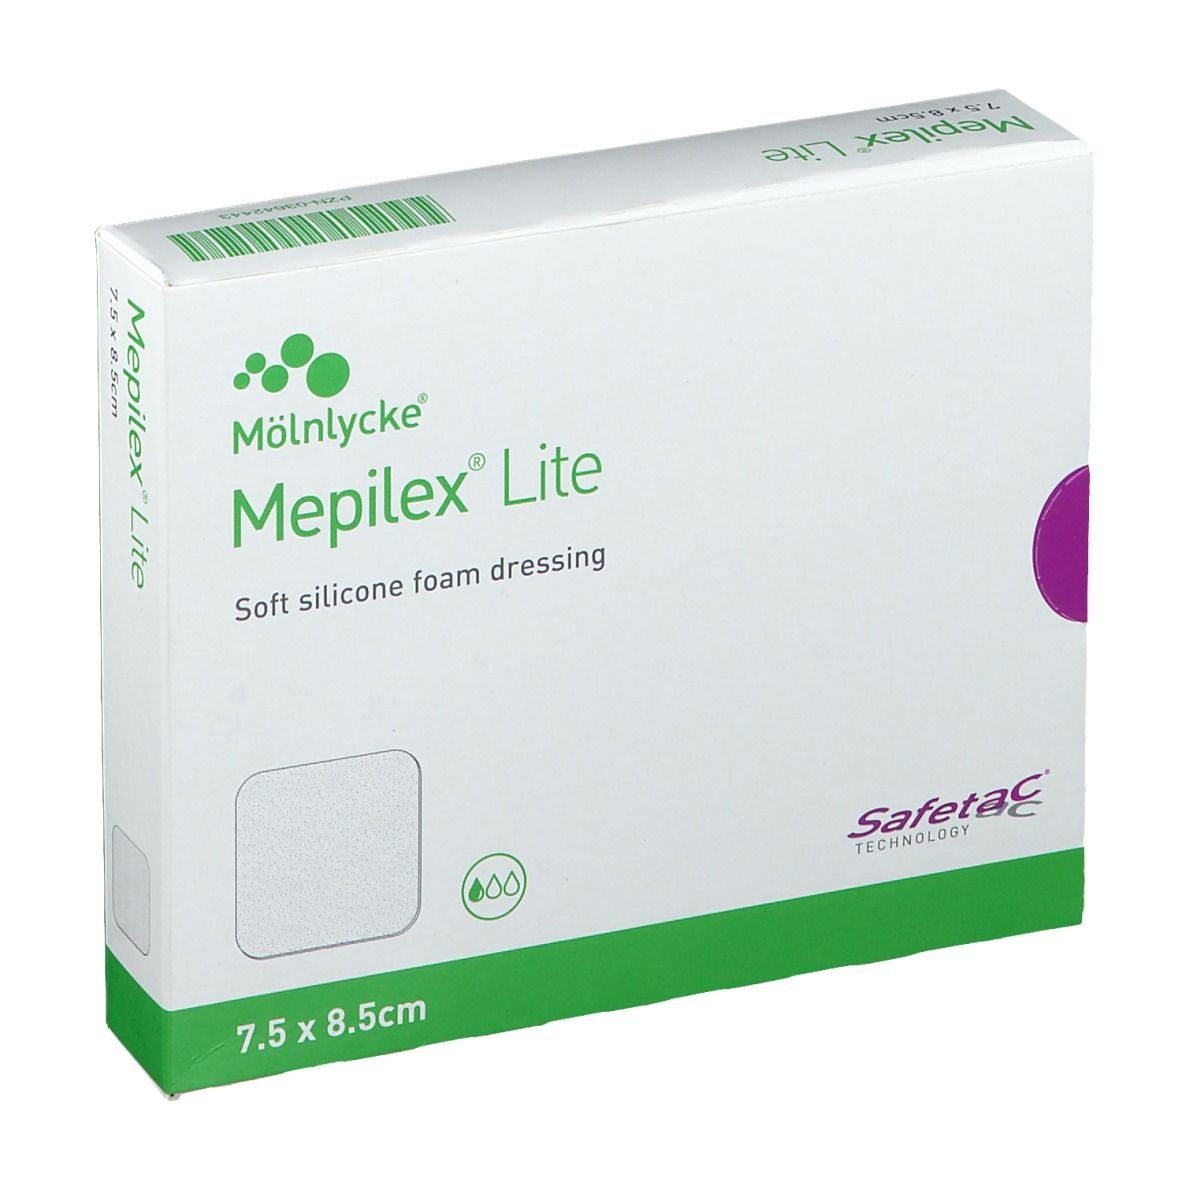 Mepilex® Lite Schaumverband 7,5 x 8,5 cm steril